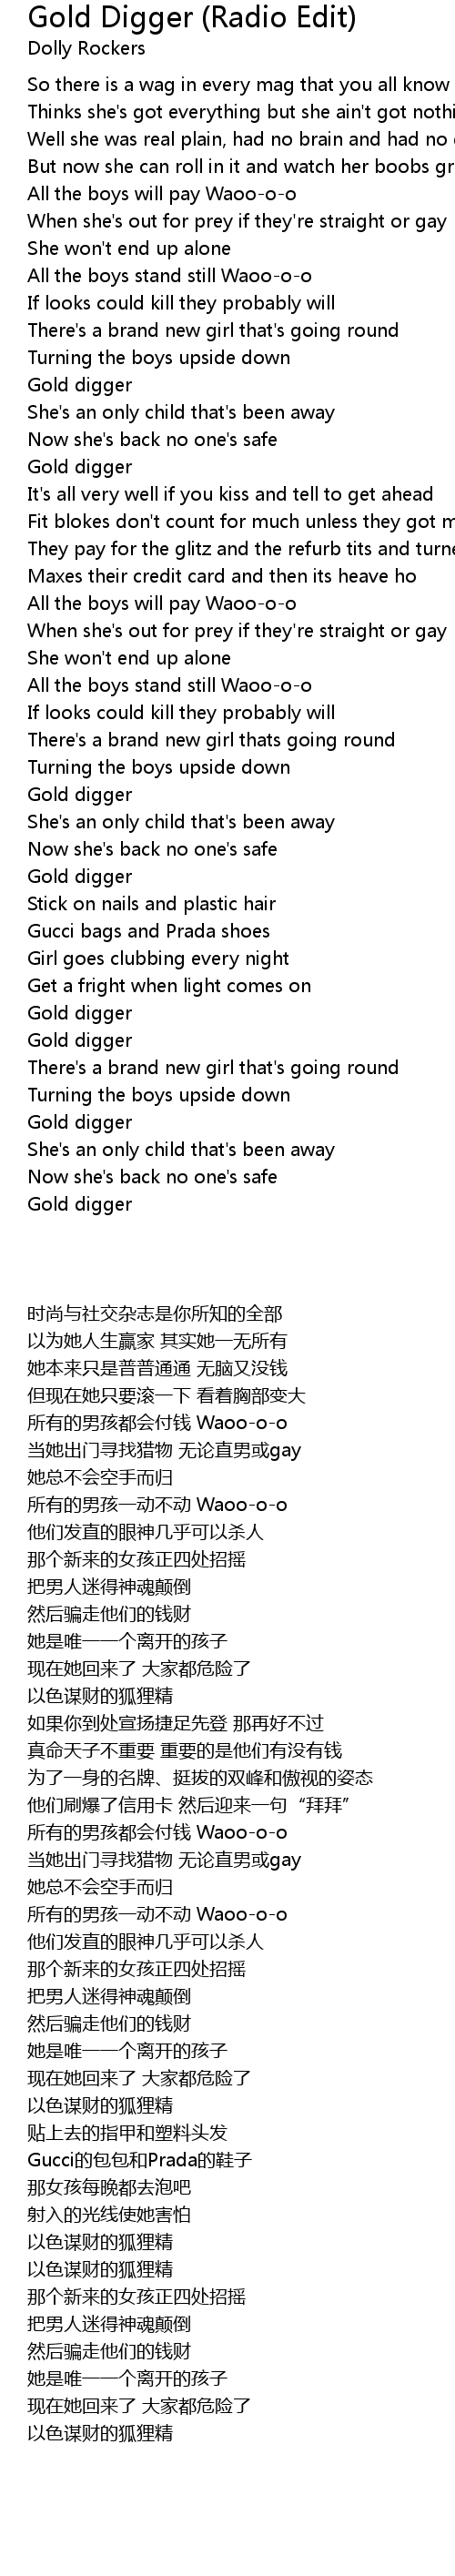 Dolly Rockers – Gold Digger Lyrics